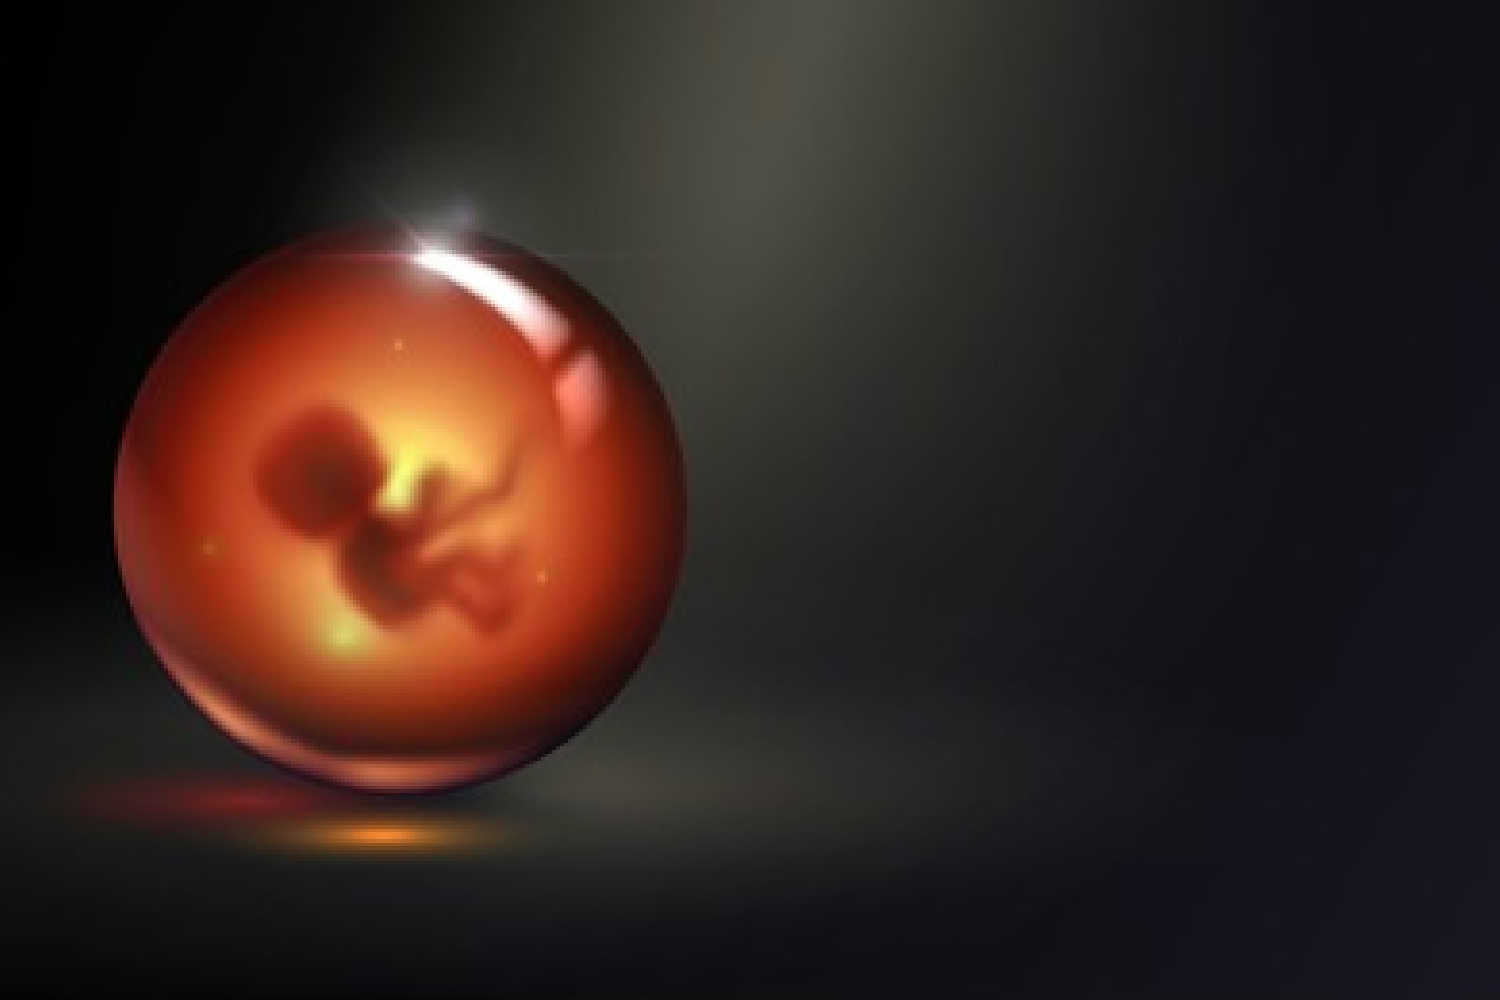 Human embryo in glass ball